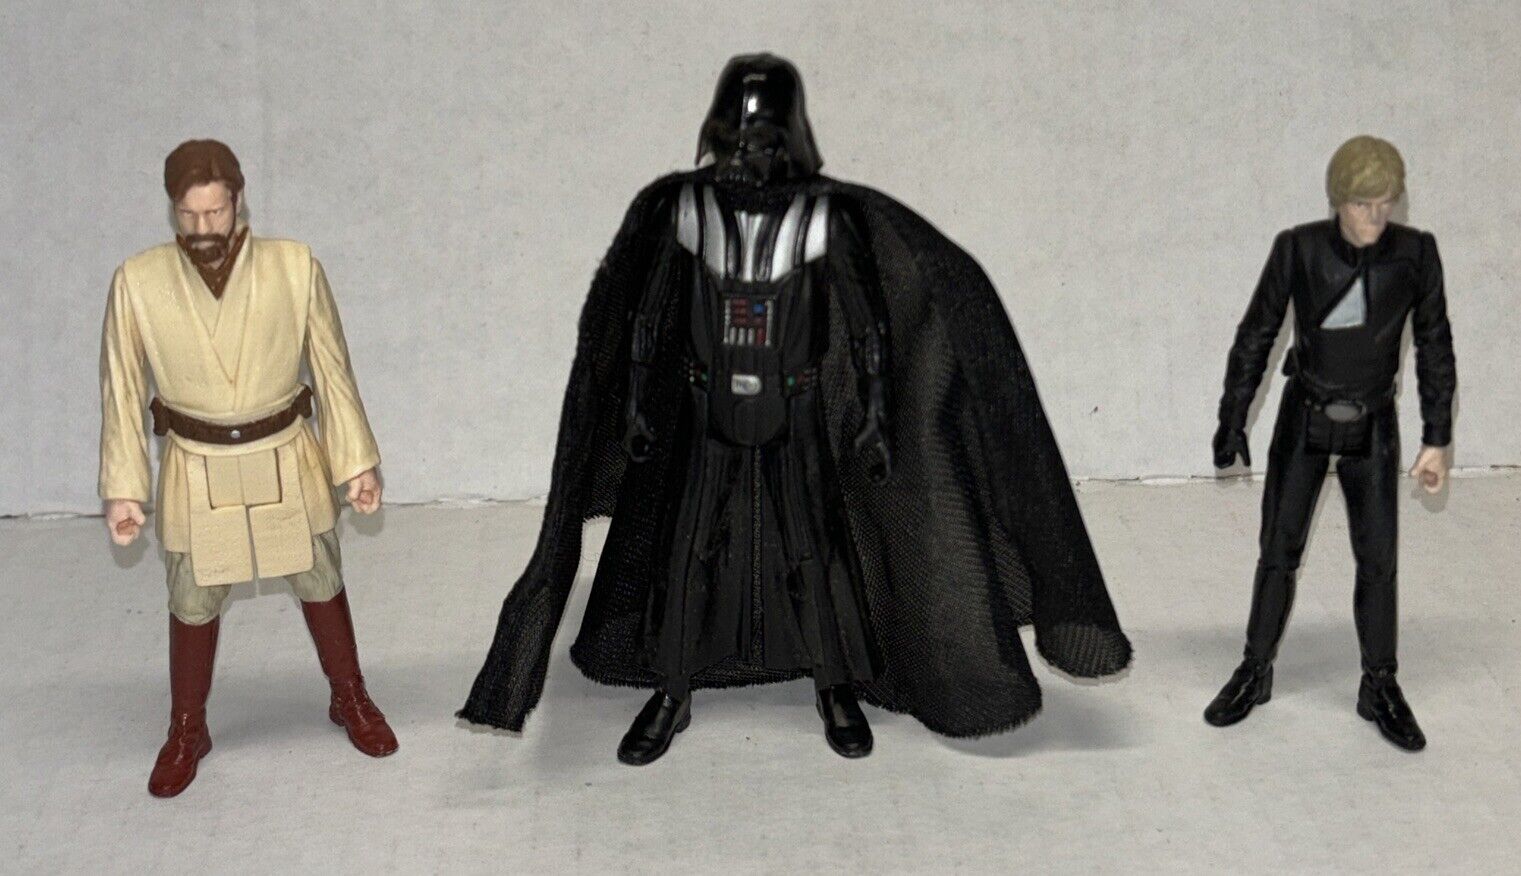 STAR WARS DARTH VADER Obi Wan Luke Skywalker 3.75" Figures Hasbro 2013 Loose OOB